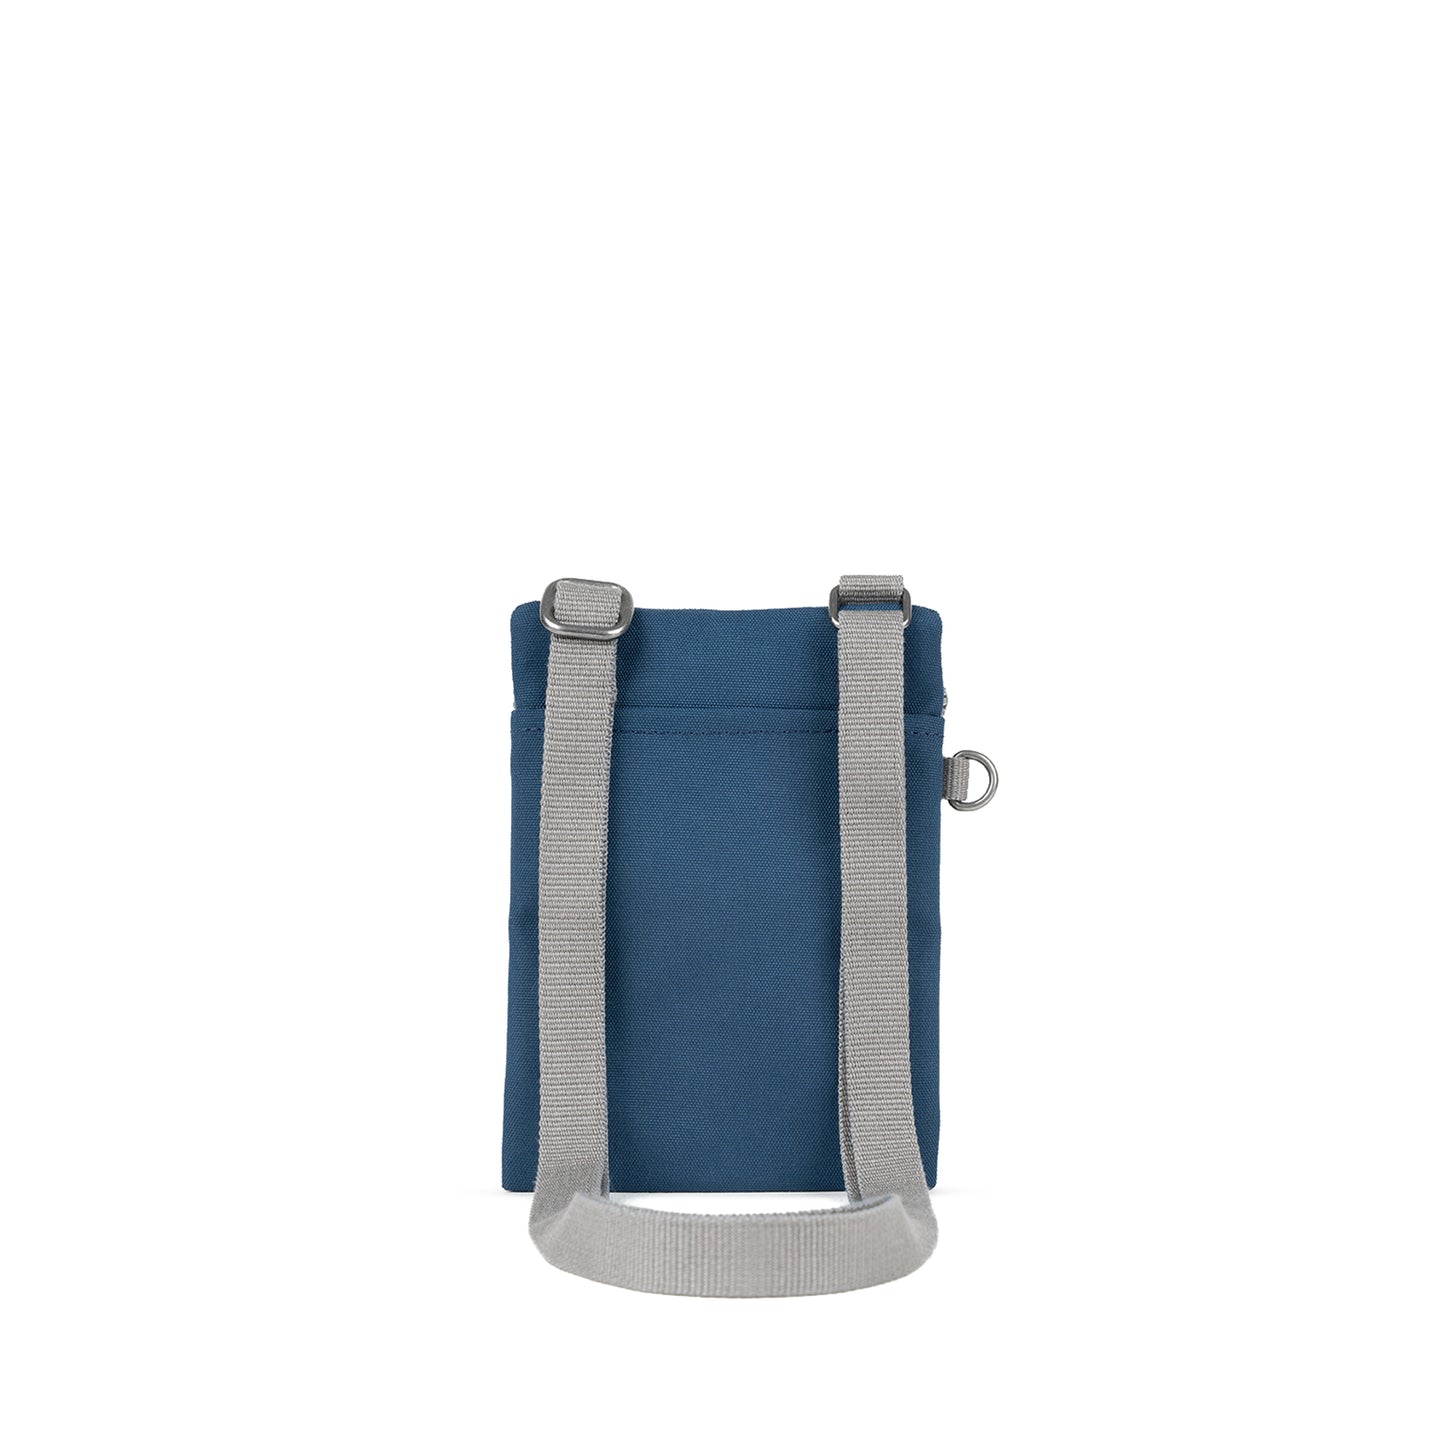 Roka London Chelsea Crossbody Phone Bag,Deep Blue (Sustainable Canvas)